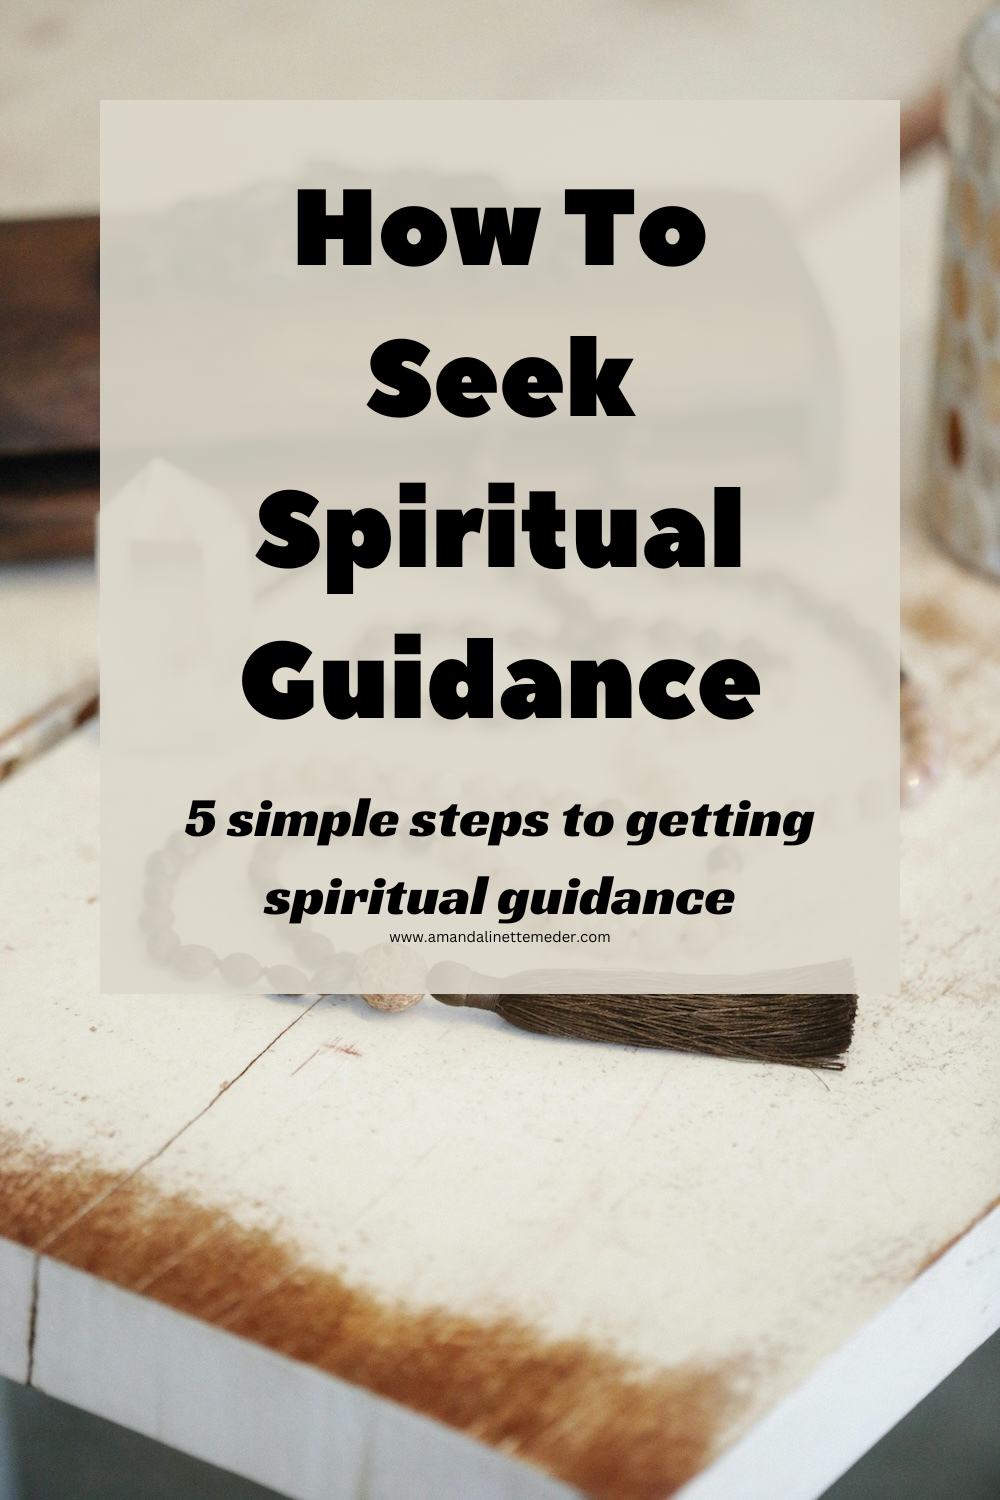 How Do I Seek Spiritual Guidance?